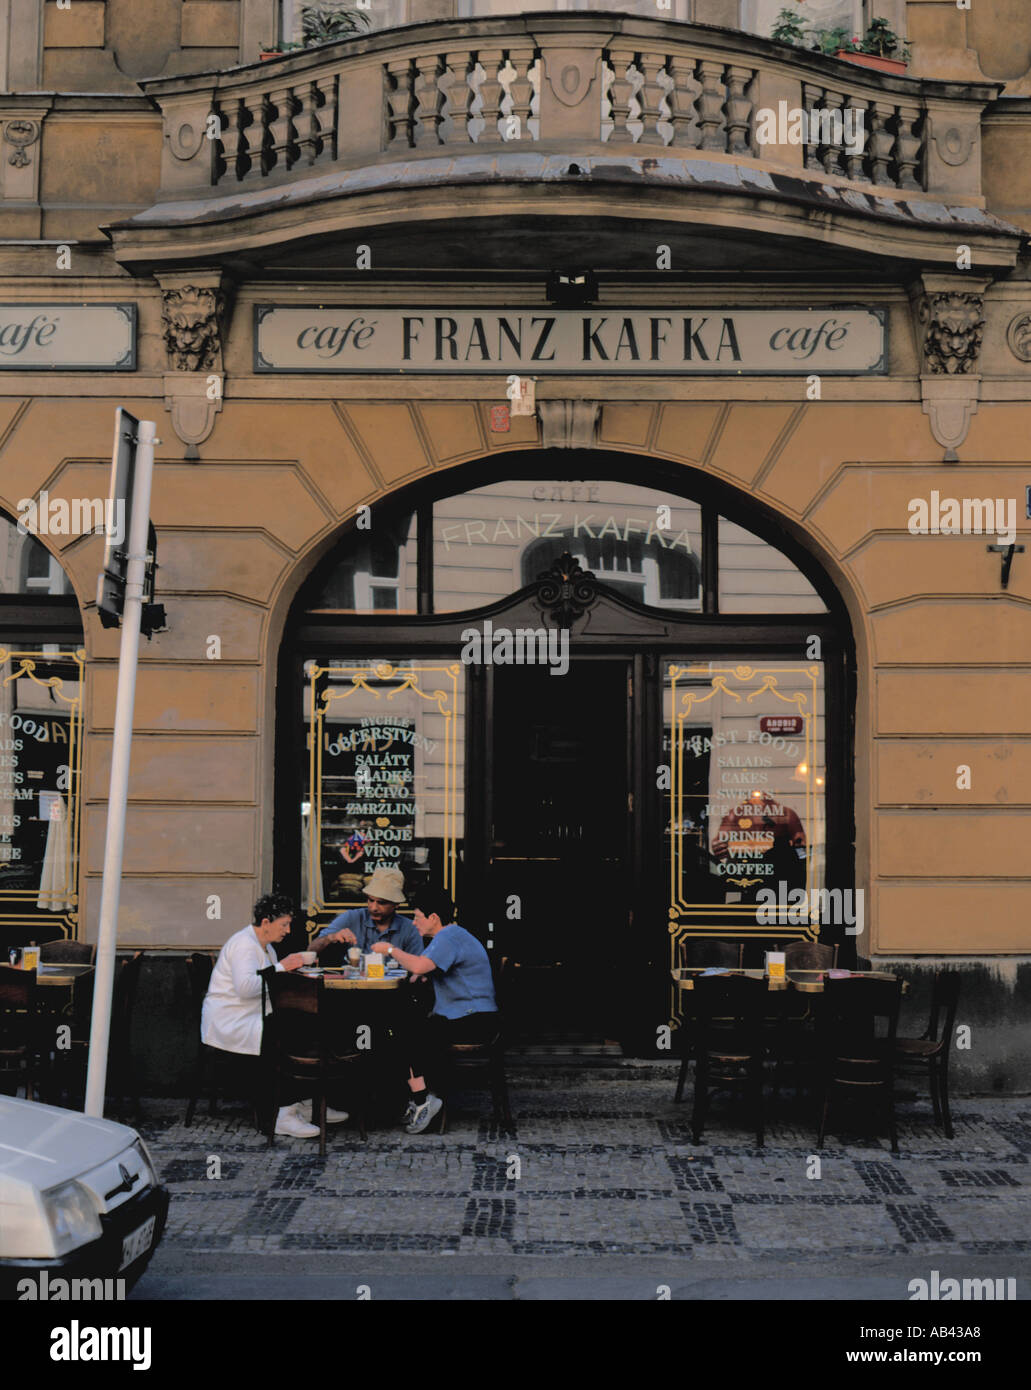 Franz Kafka cafe, central Prague, Czech Republic. Stock Photo